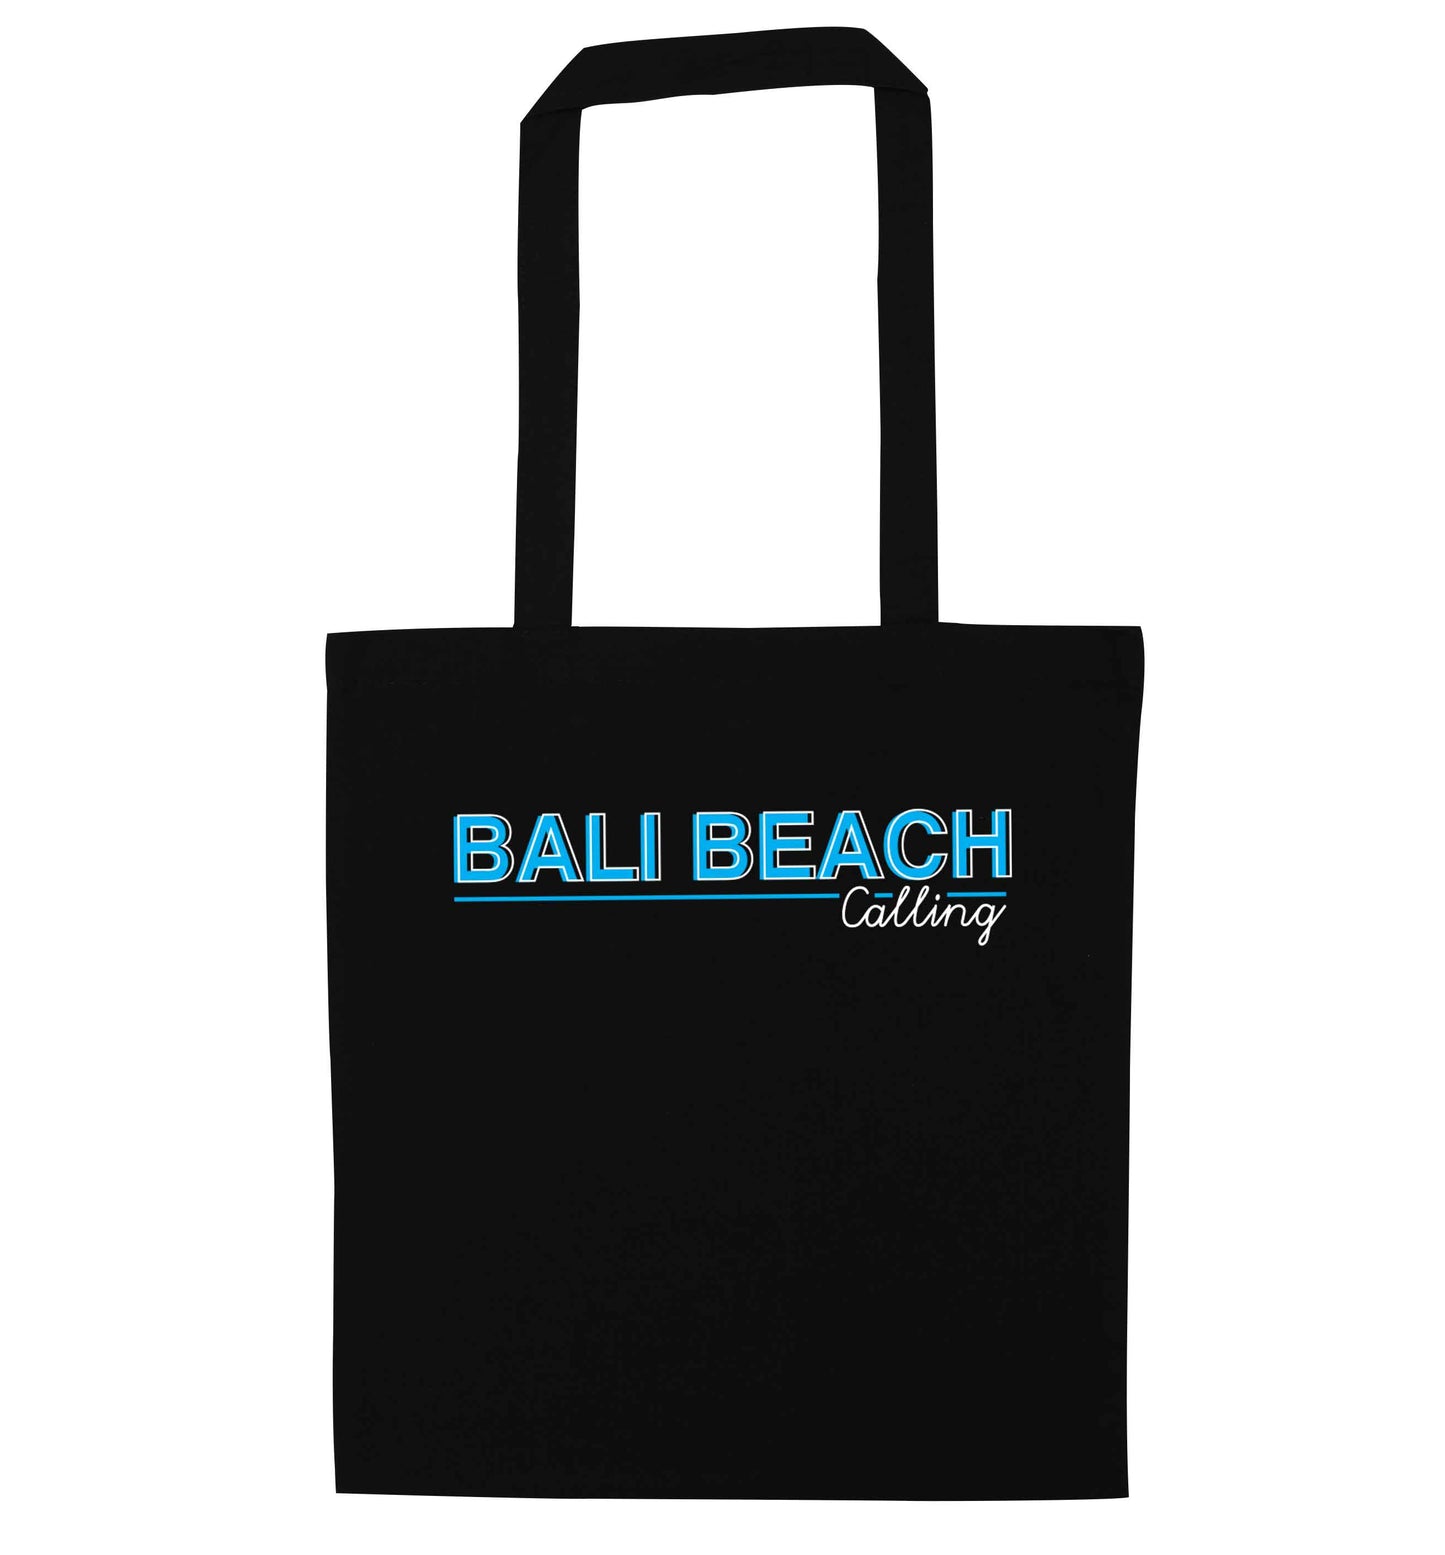 Bali beach calling black tote bag